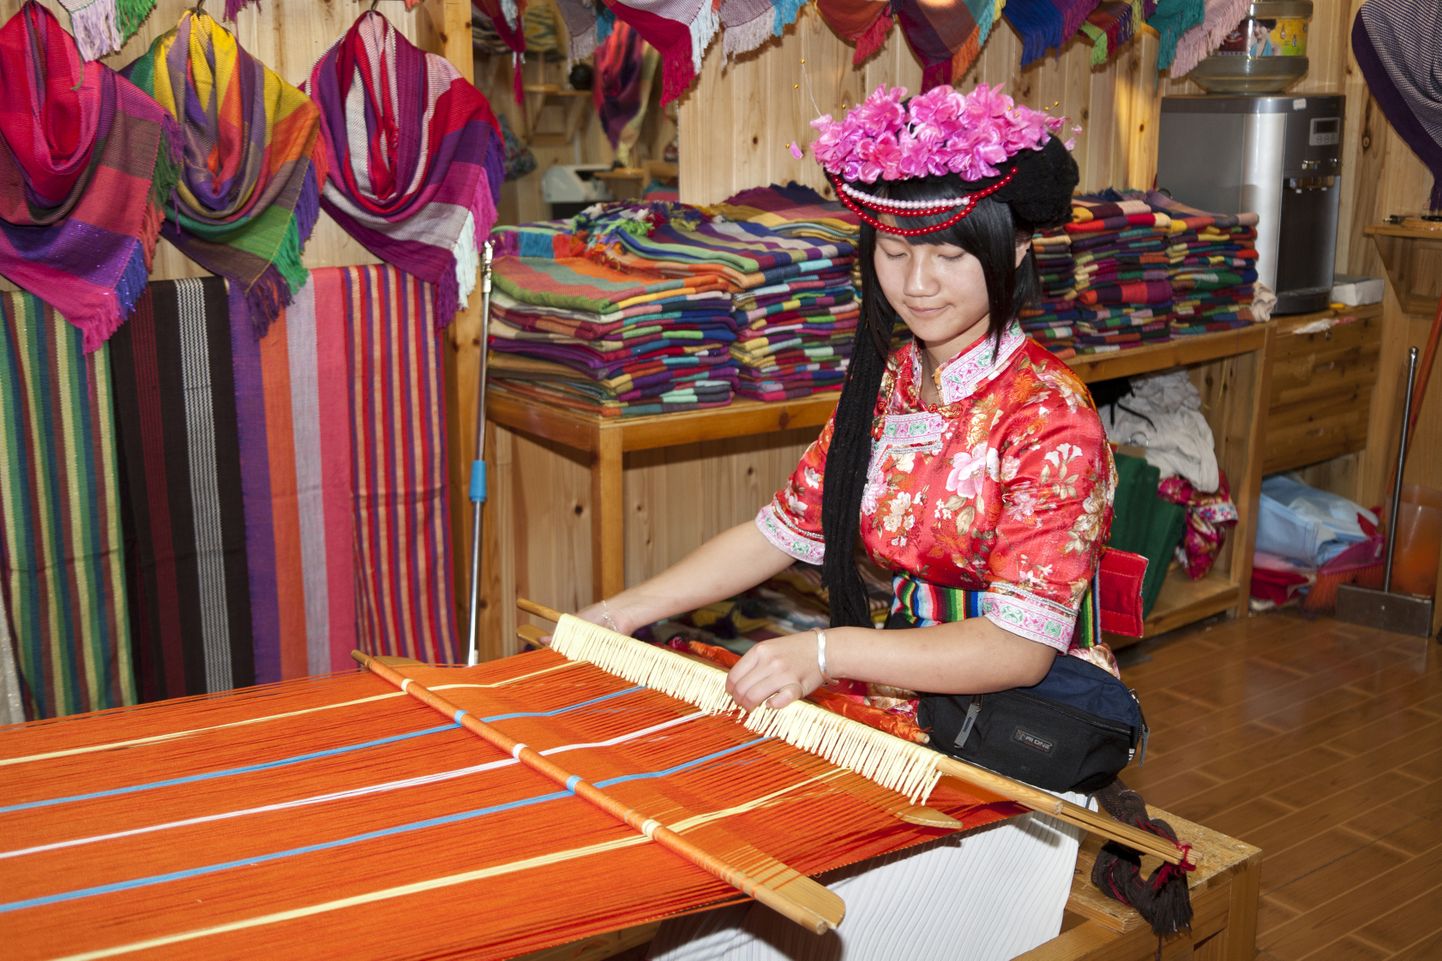 ORIGINAL:

Mosuo woman weaving colourful clothing in her shop, Lijiang, Yunnan Province, China